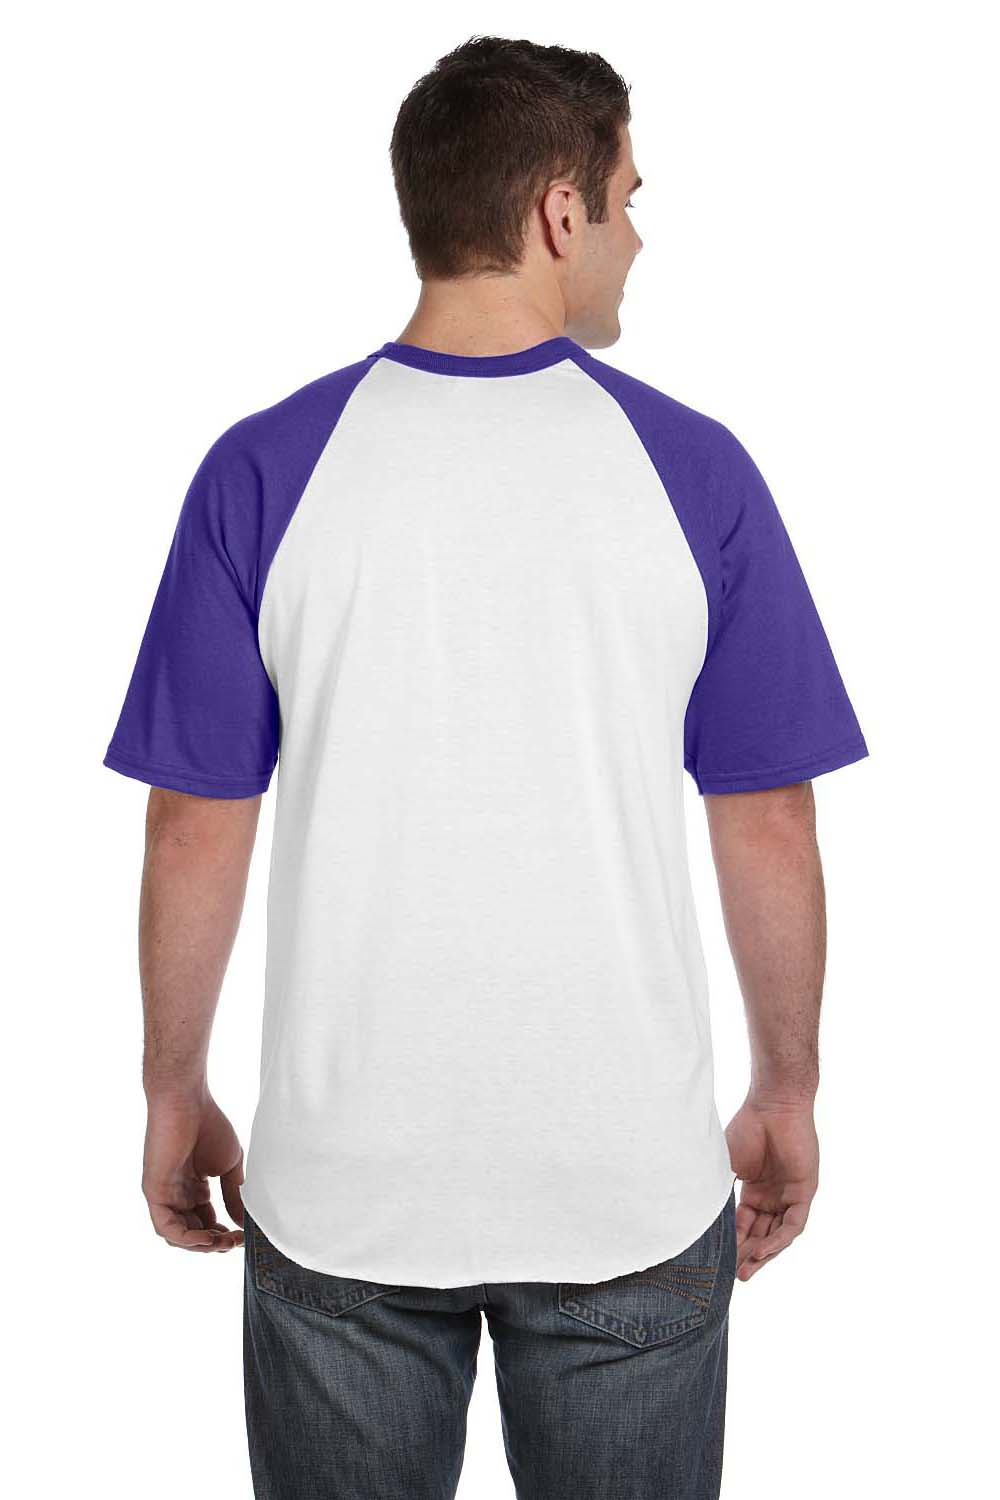 Augusta Sportswear 423 Mens Short Sleeve Crewneck T-Shirt White/Purple Model Back